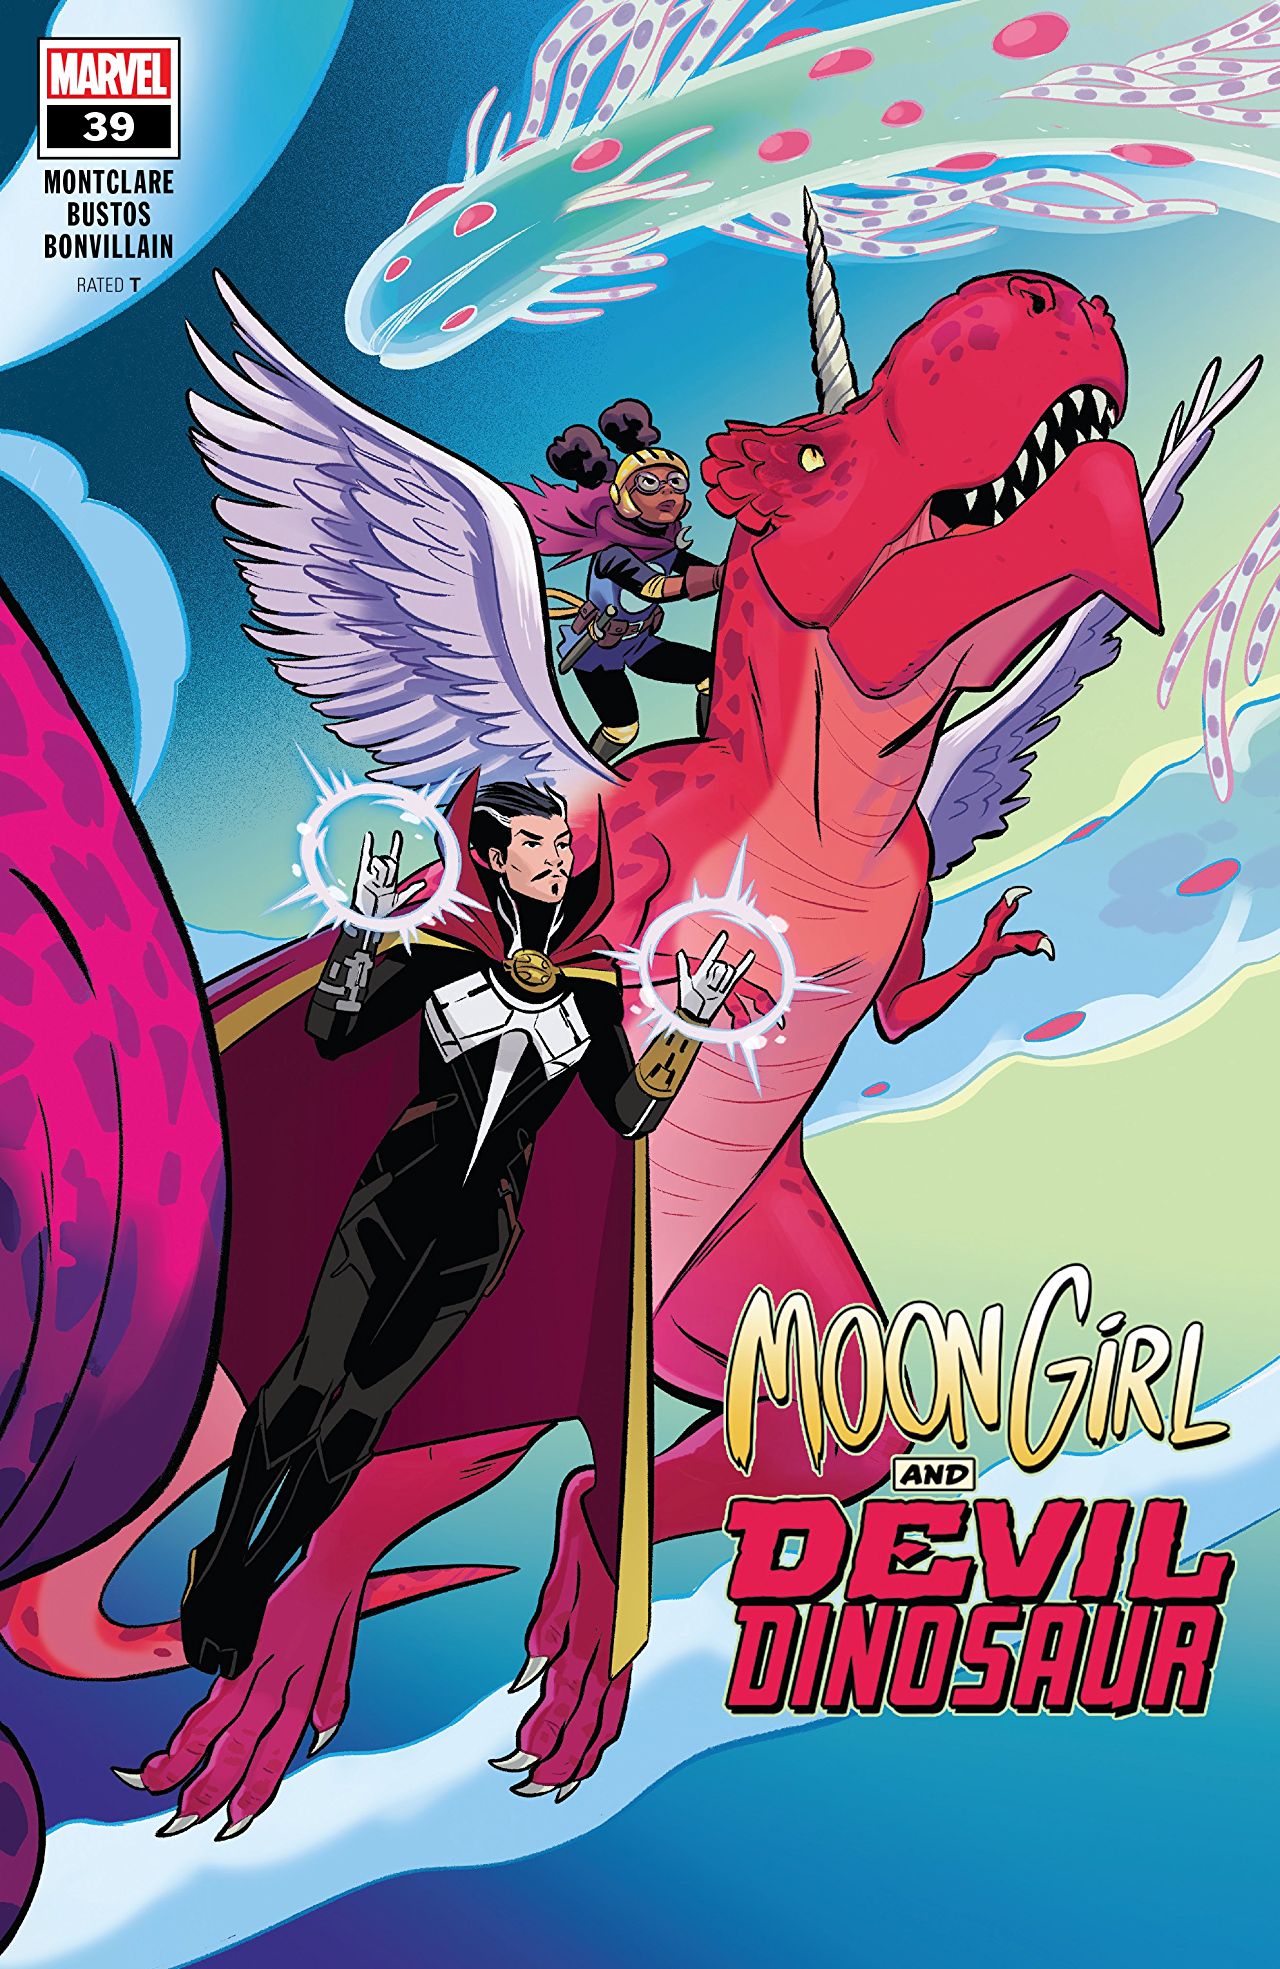 Marvel Preview: Moon Girl and Devil Dinosaur #39